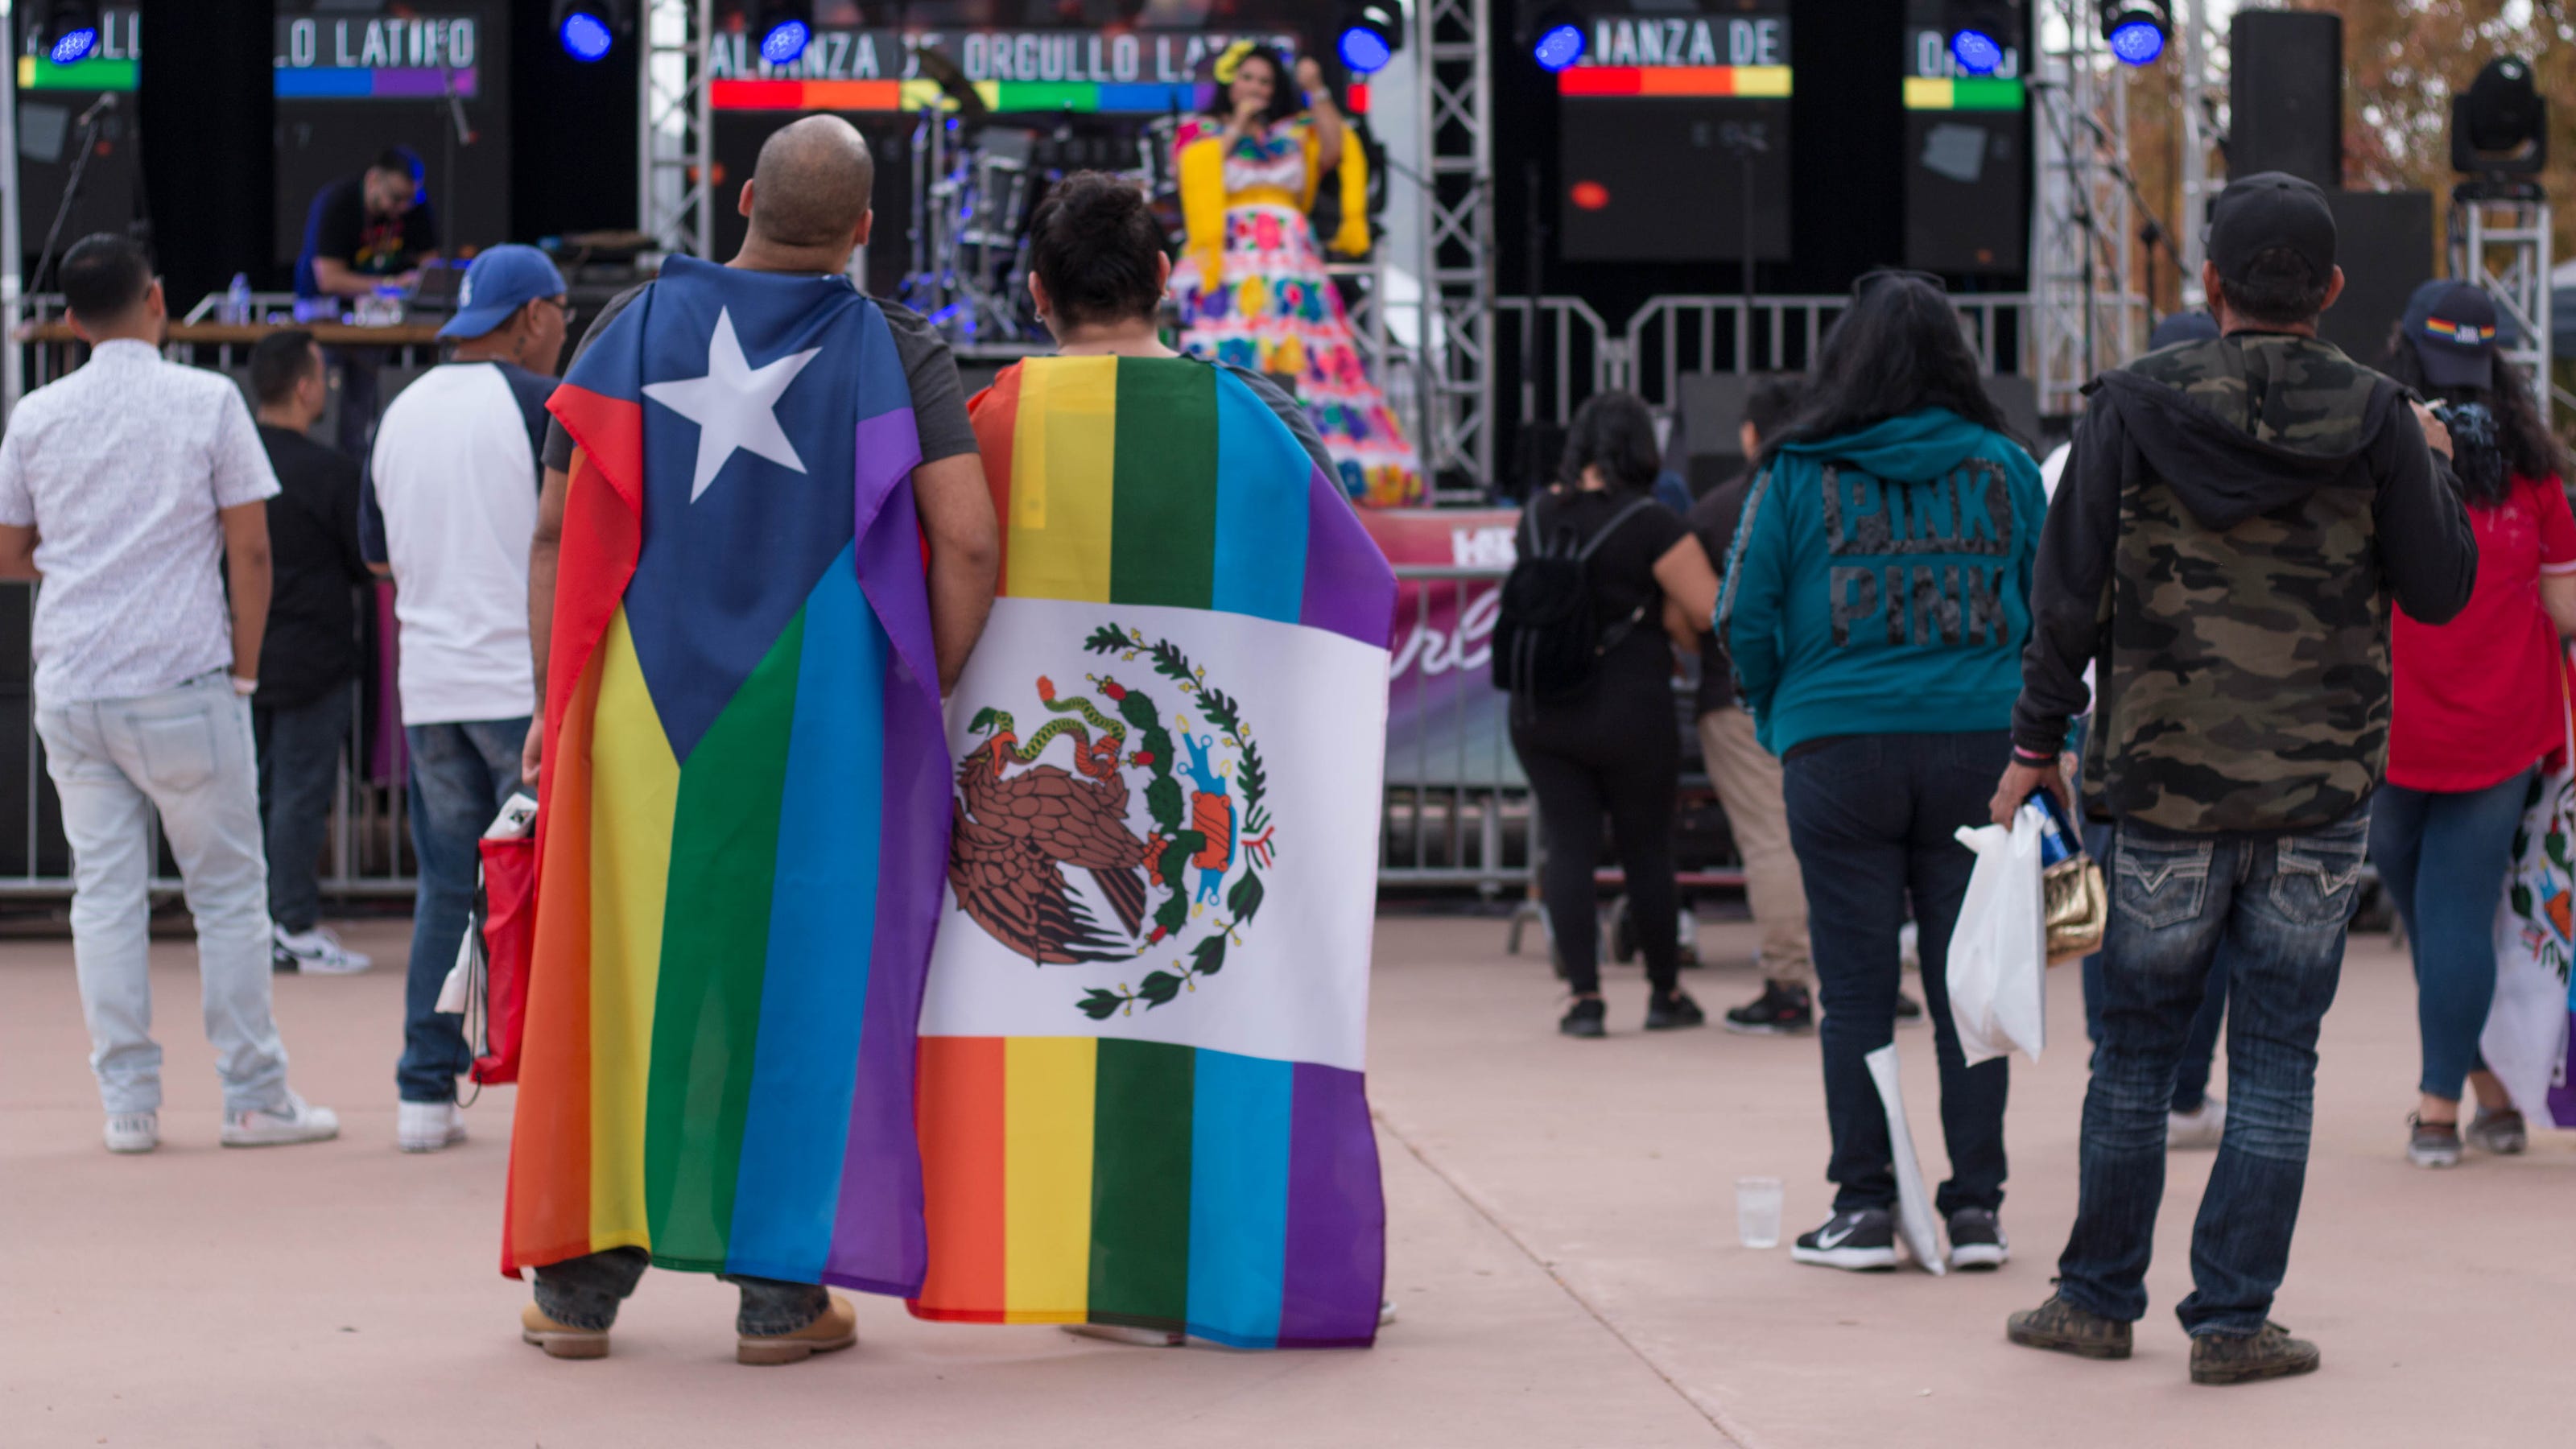 Phoenix's 1st Latino Pride Festival is 'largest Latino LGBT gathering